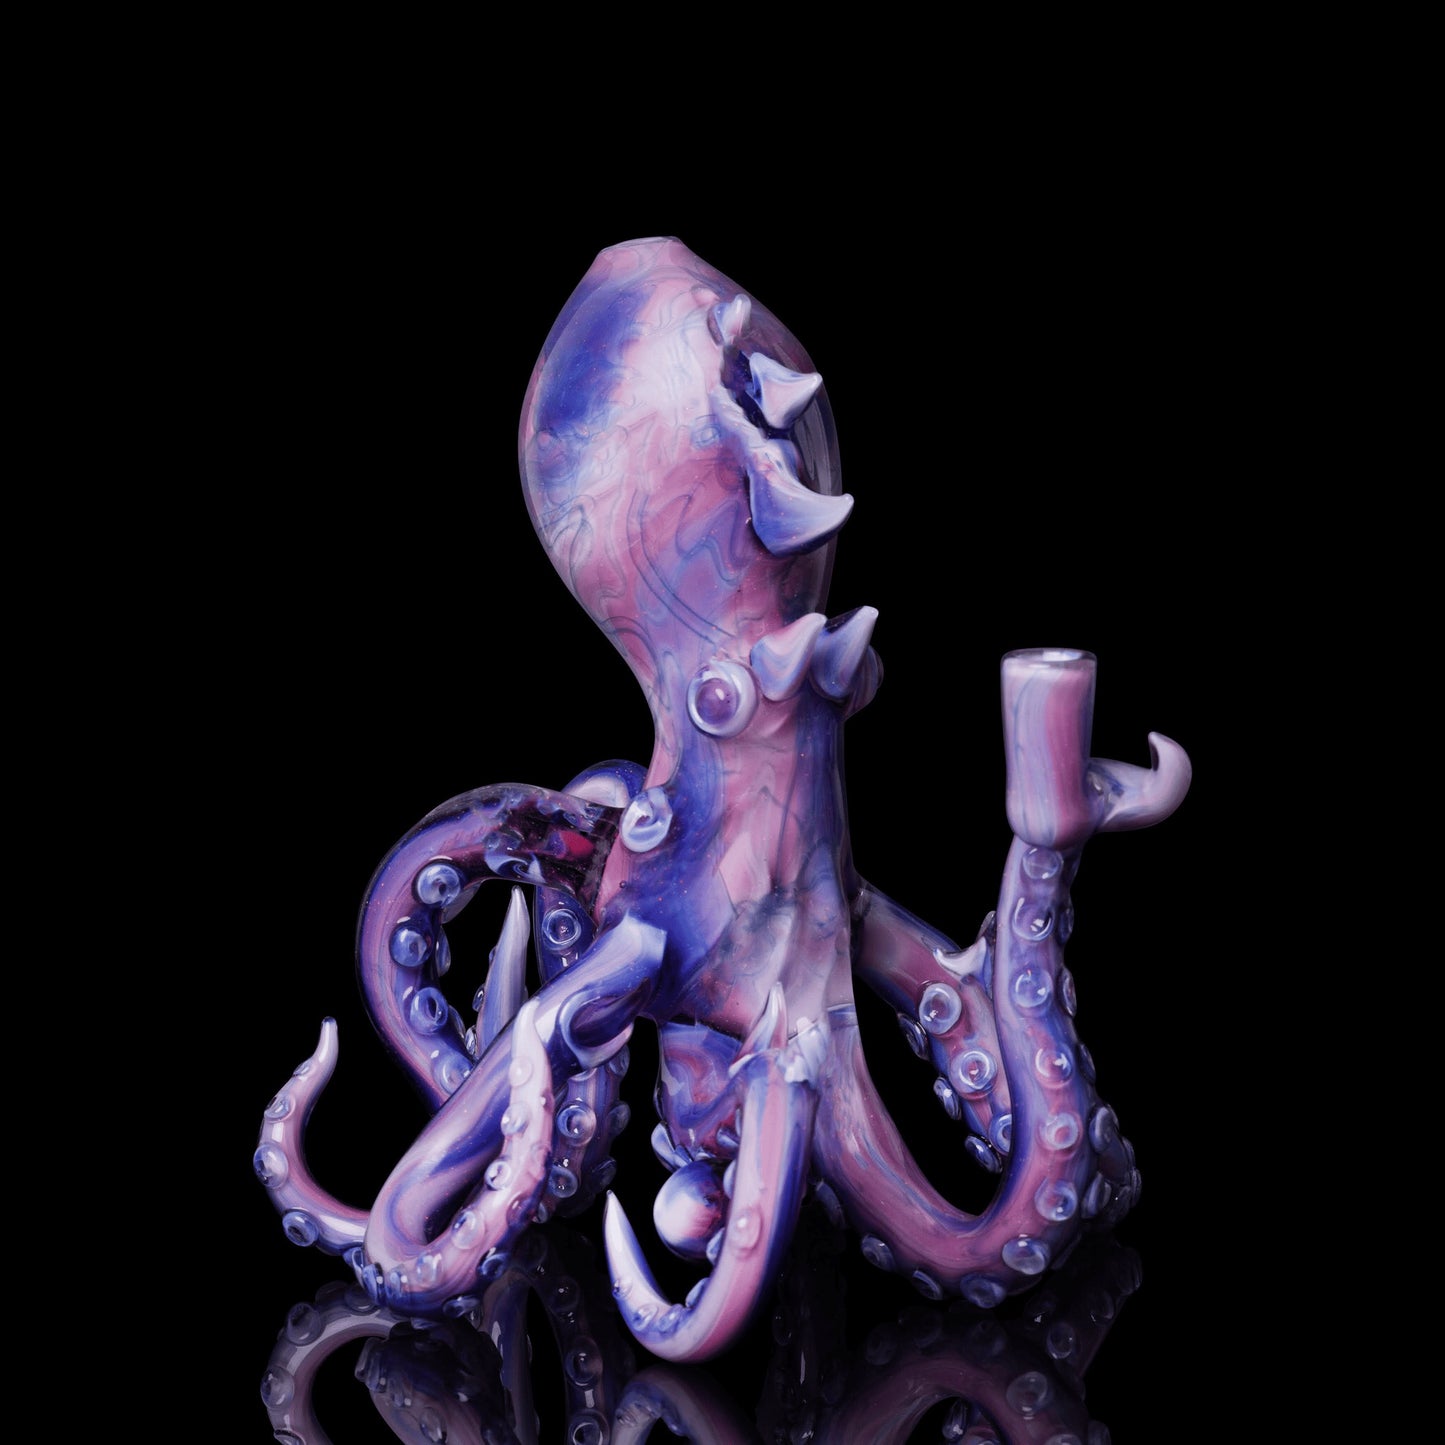 exquisite art piece - Collab Kraken by Wicked Glass x Scomo Moanet (Scribble Season 2022)